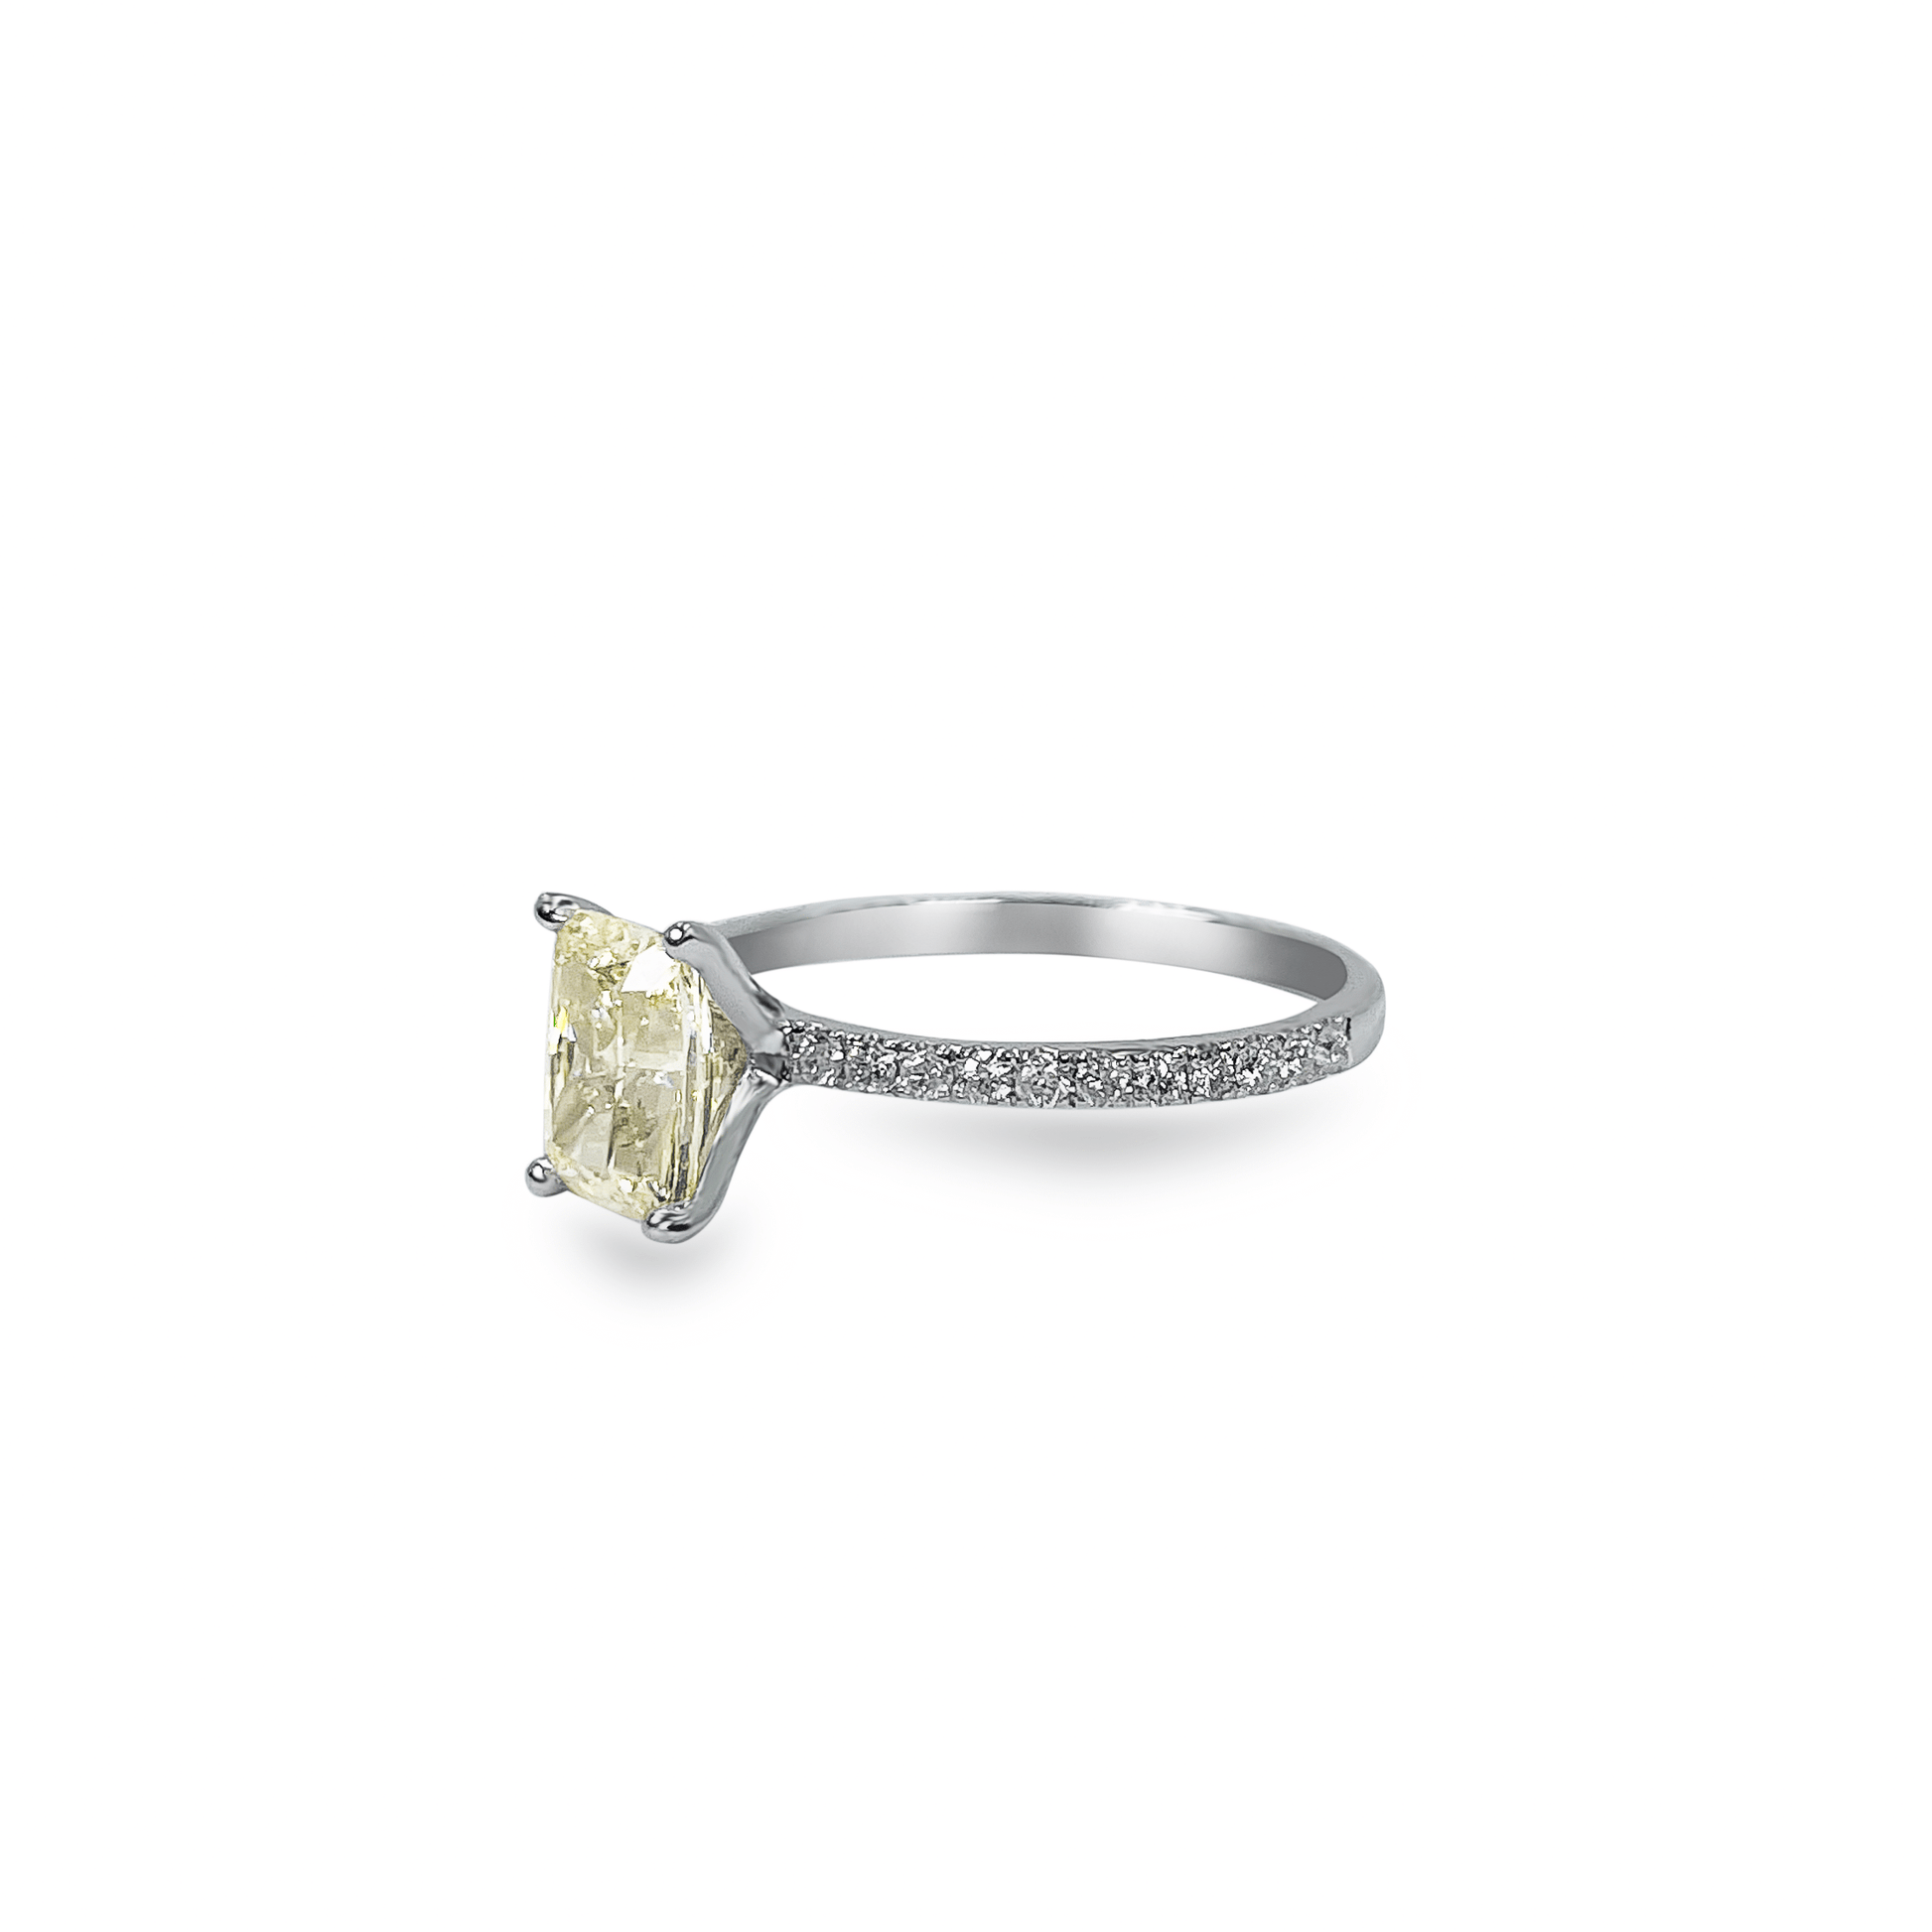 1.16 ct Yellow Cushion Cut solitaire with diamonds on band- جرس - Luxury Diamond Jewelry shop Dubai - SABA DIAMONDS